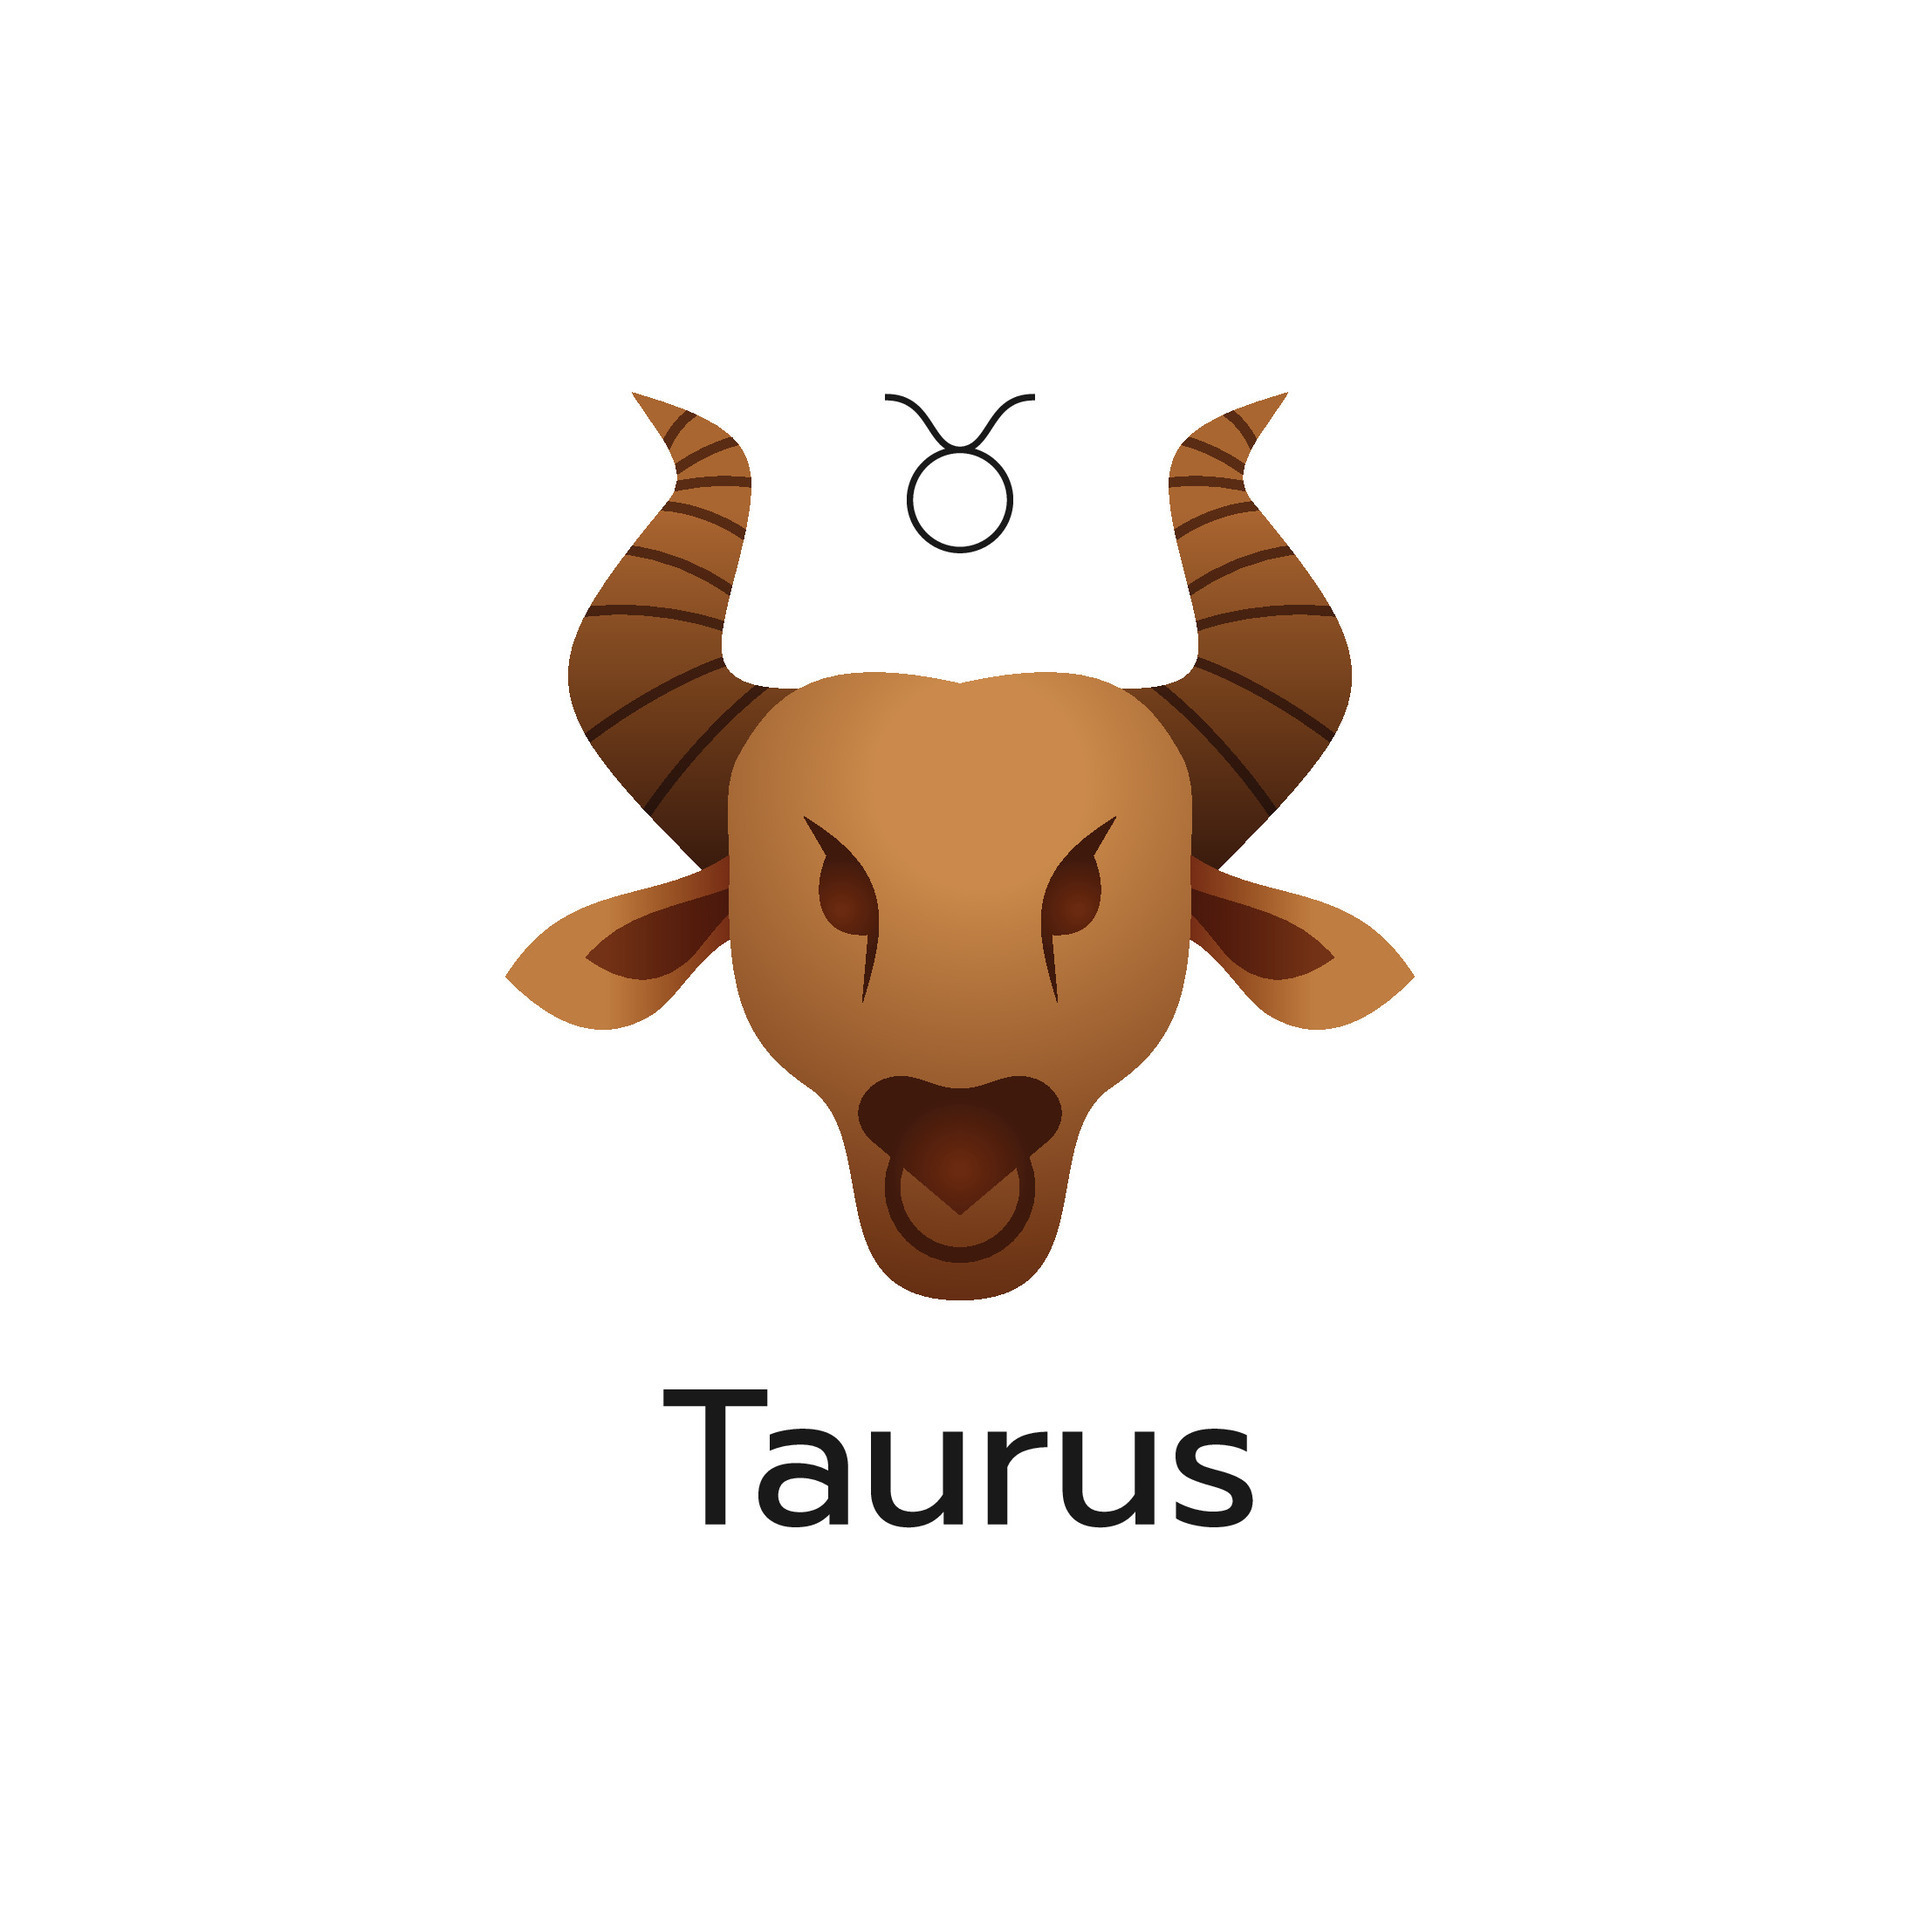 Taurus zodiac sign logo icon isolated horoscope symbol vector ...